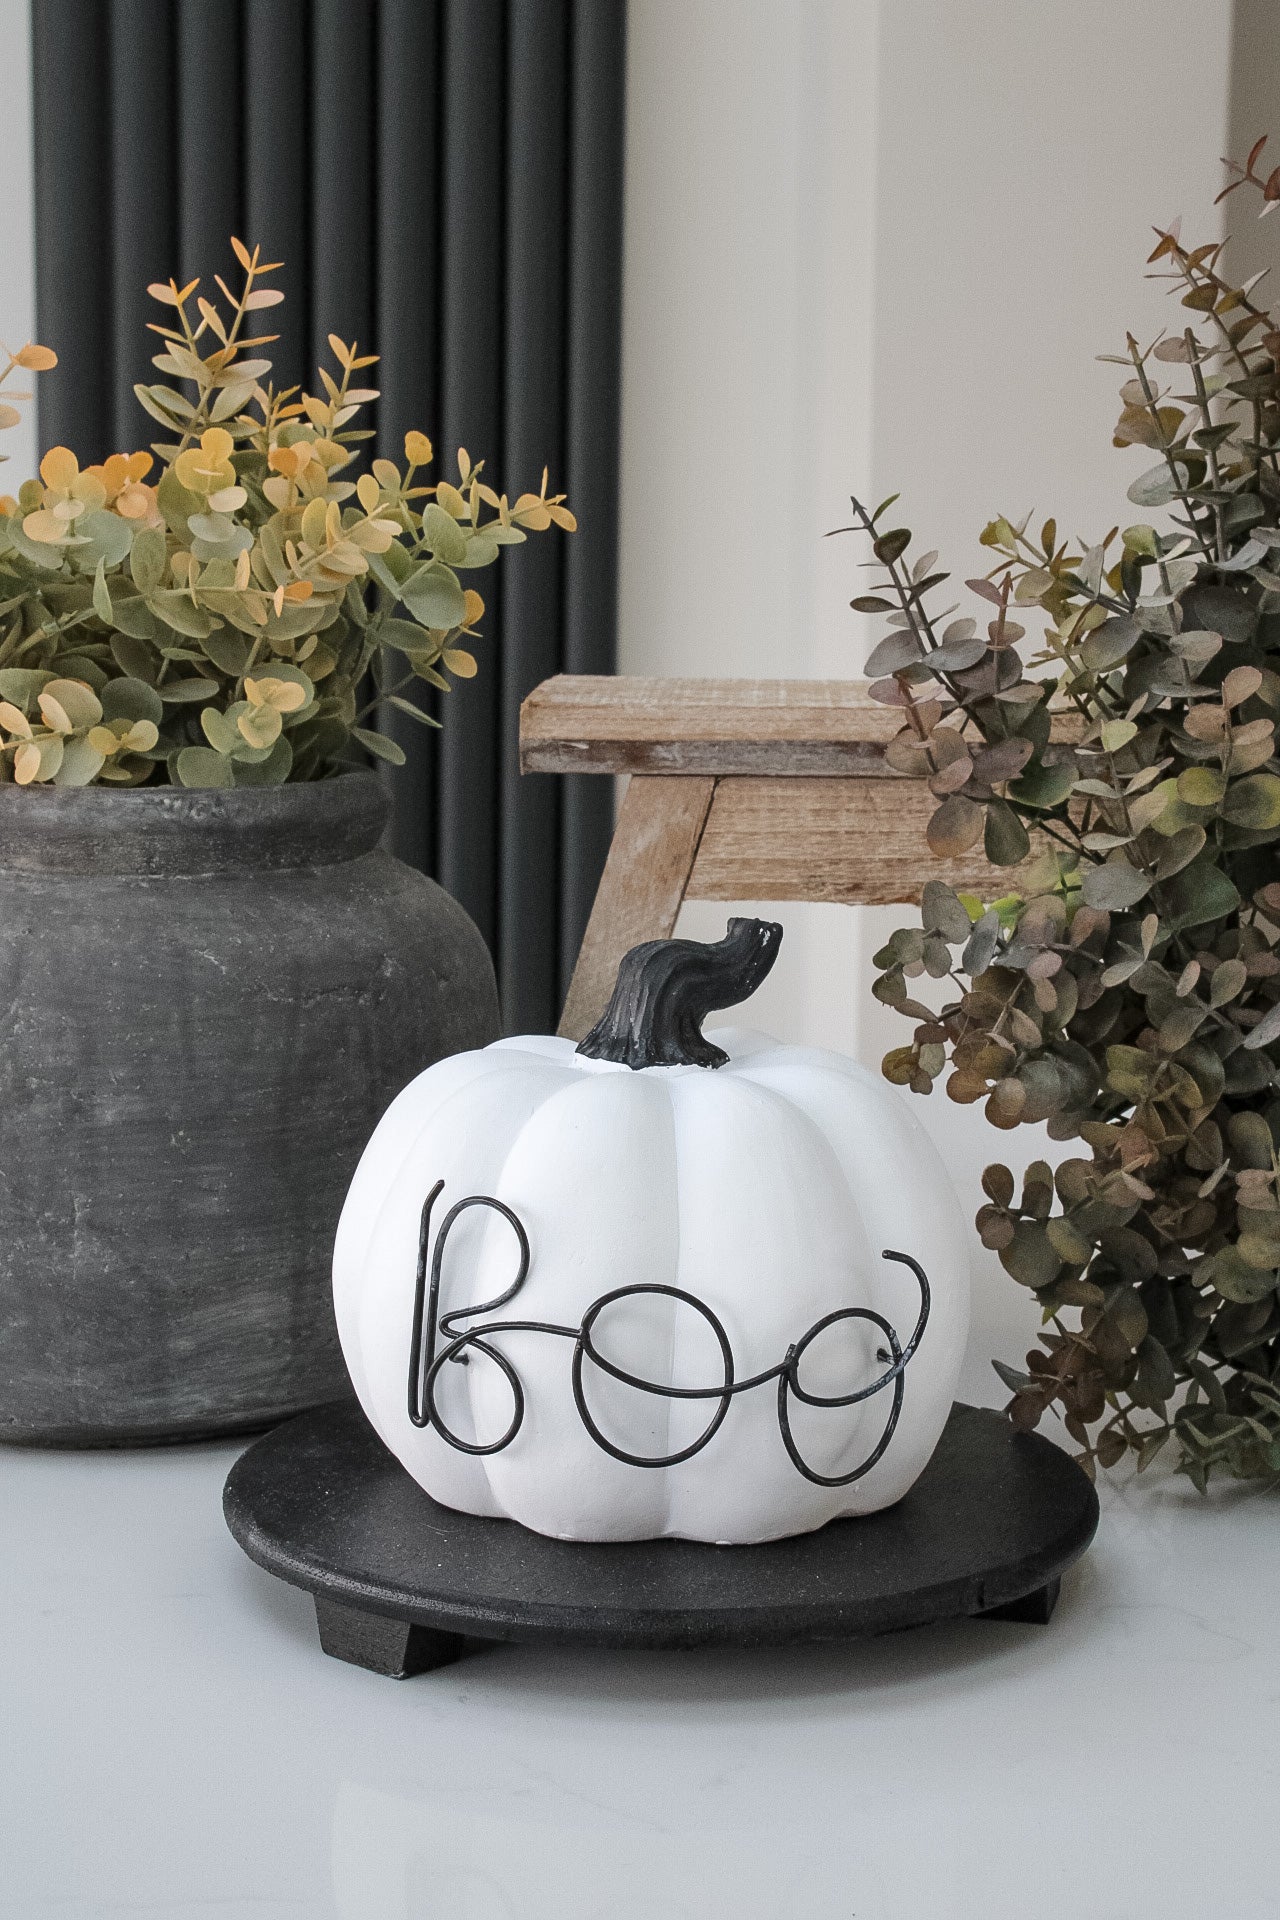 Black and White Boo Pumpkin